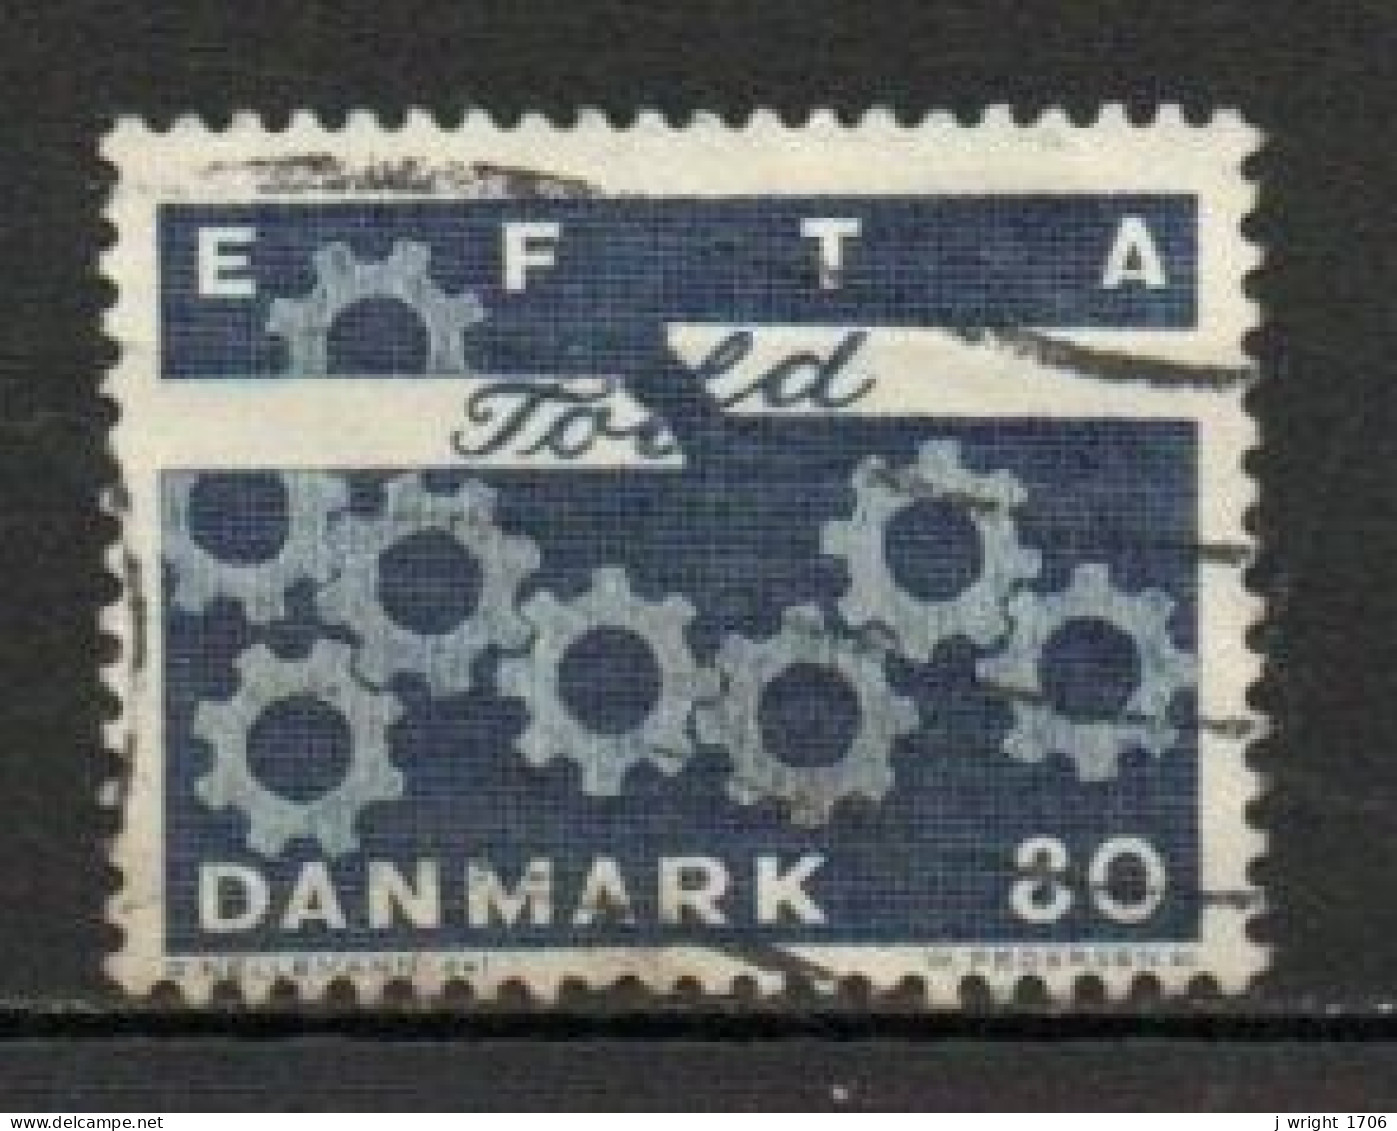 Denmark, 1967, EFTA, 80ø, USED - Oblitérés